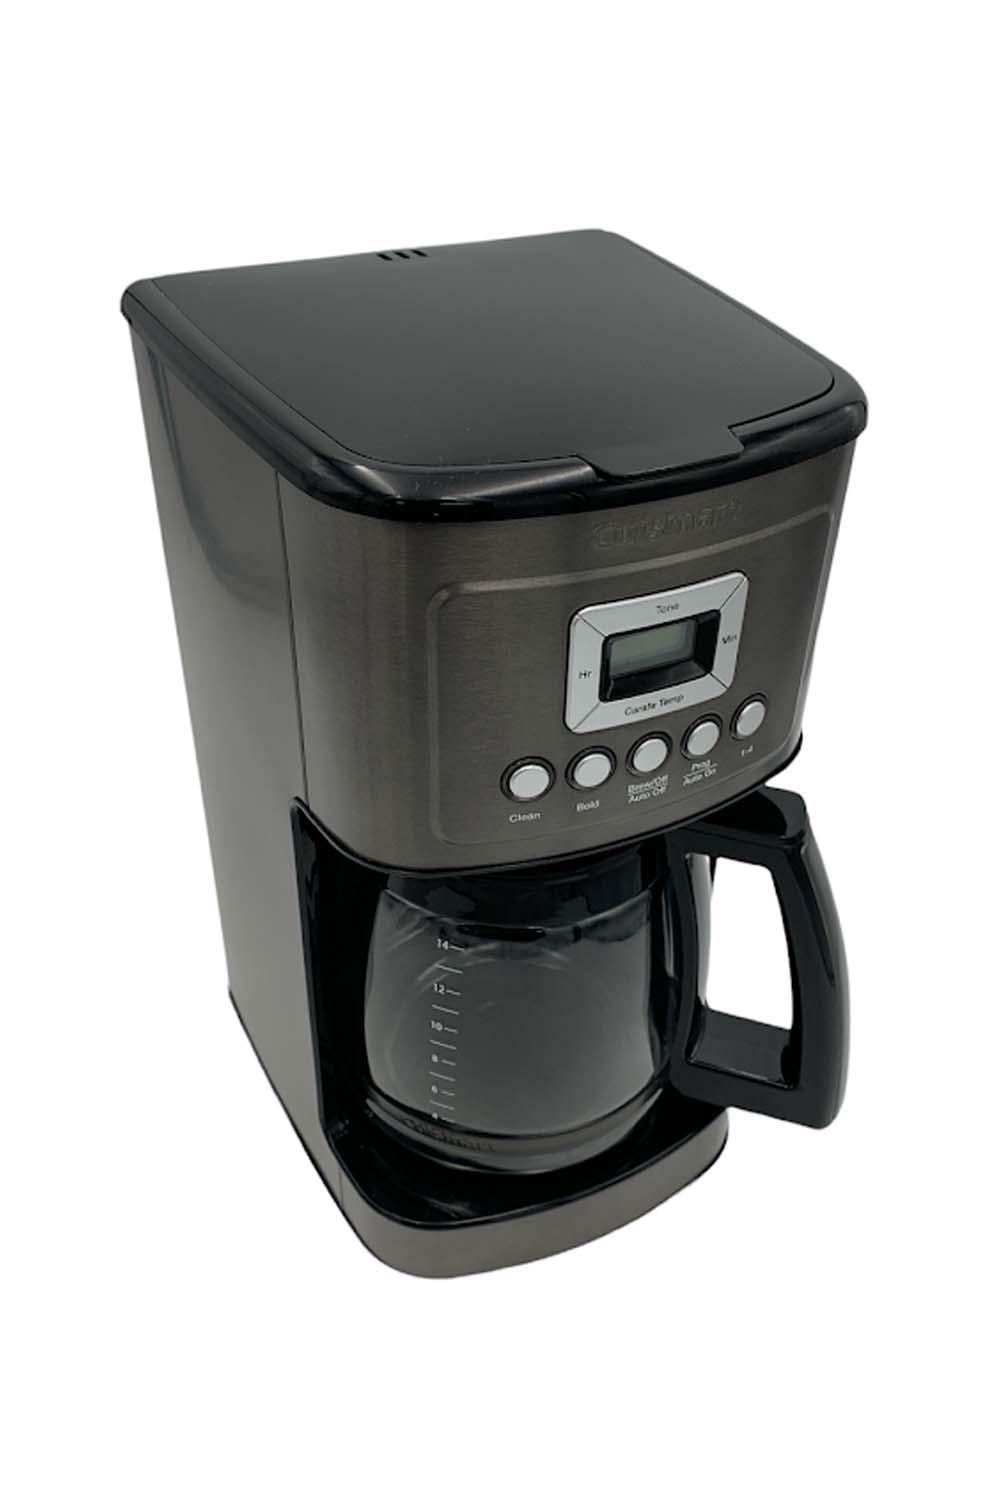 Cuisinart DCC-3200 14-Cup Programmable Coffeemaker